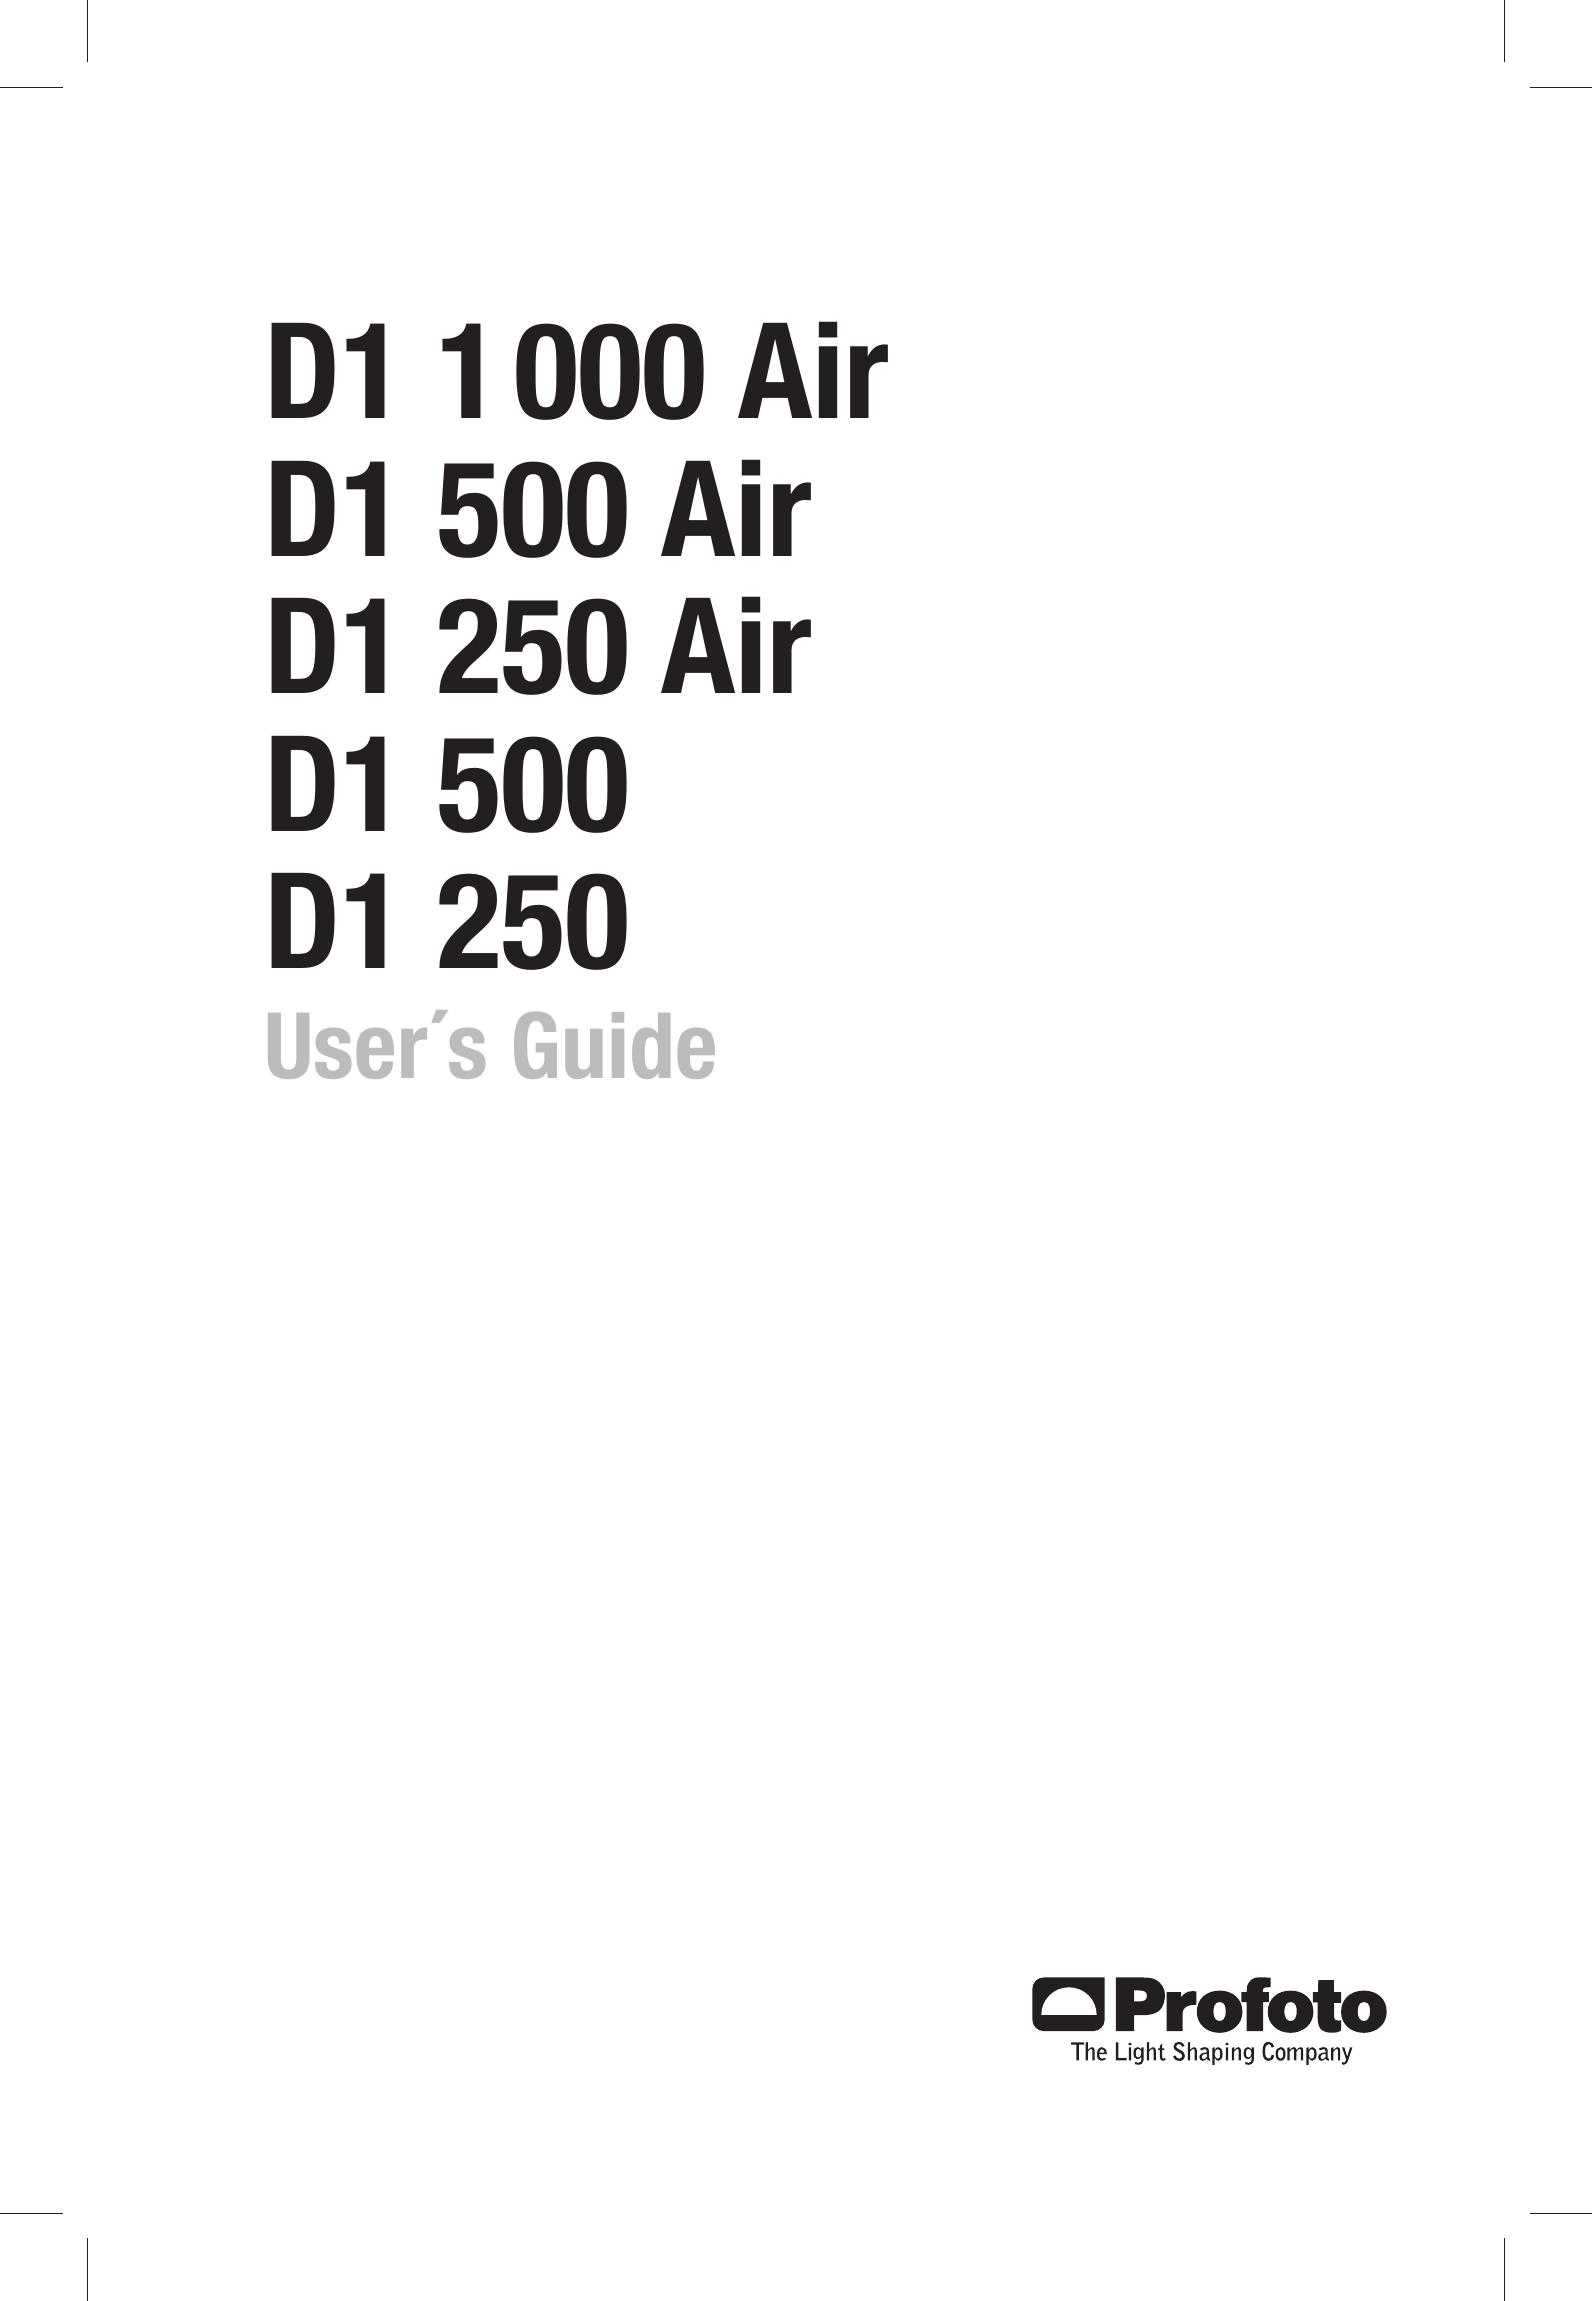 Profoto D1 1000 Air Digital Camera User Manual